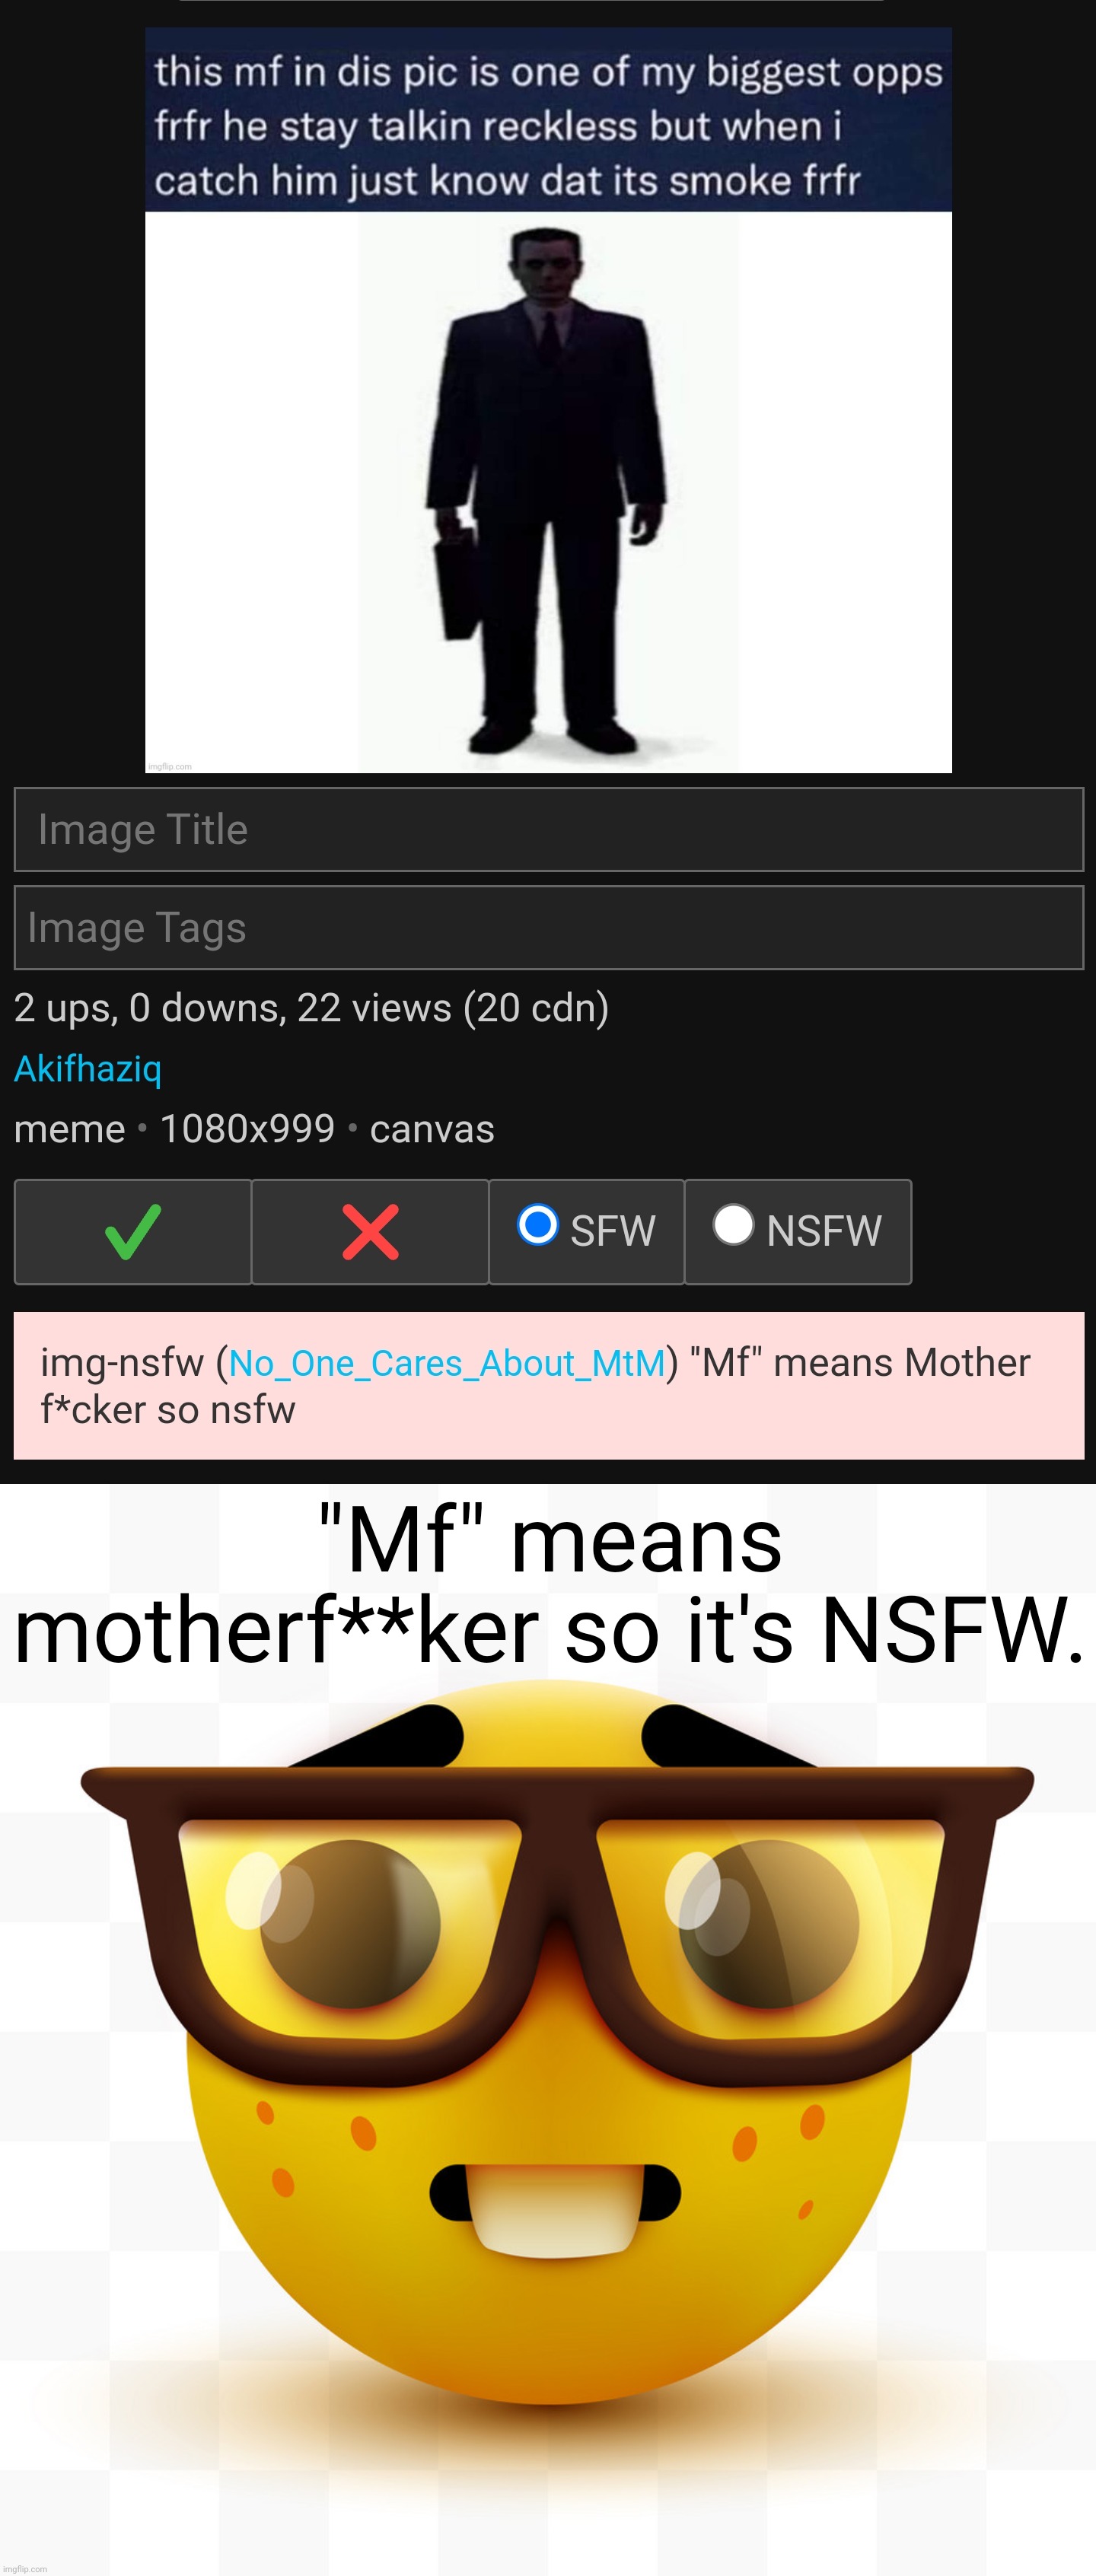 Nerd moment | "Mf" means motherf**ker so it's NSFW. | image tagged in nerd emoji,memes,nsfw,flags,nerd | made w/ Imgflip meme maker